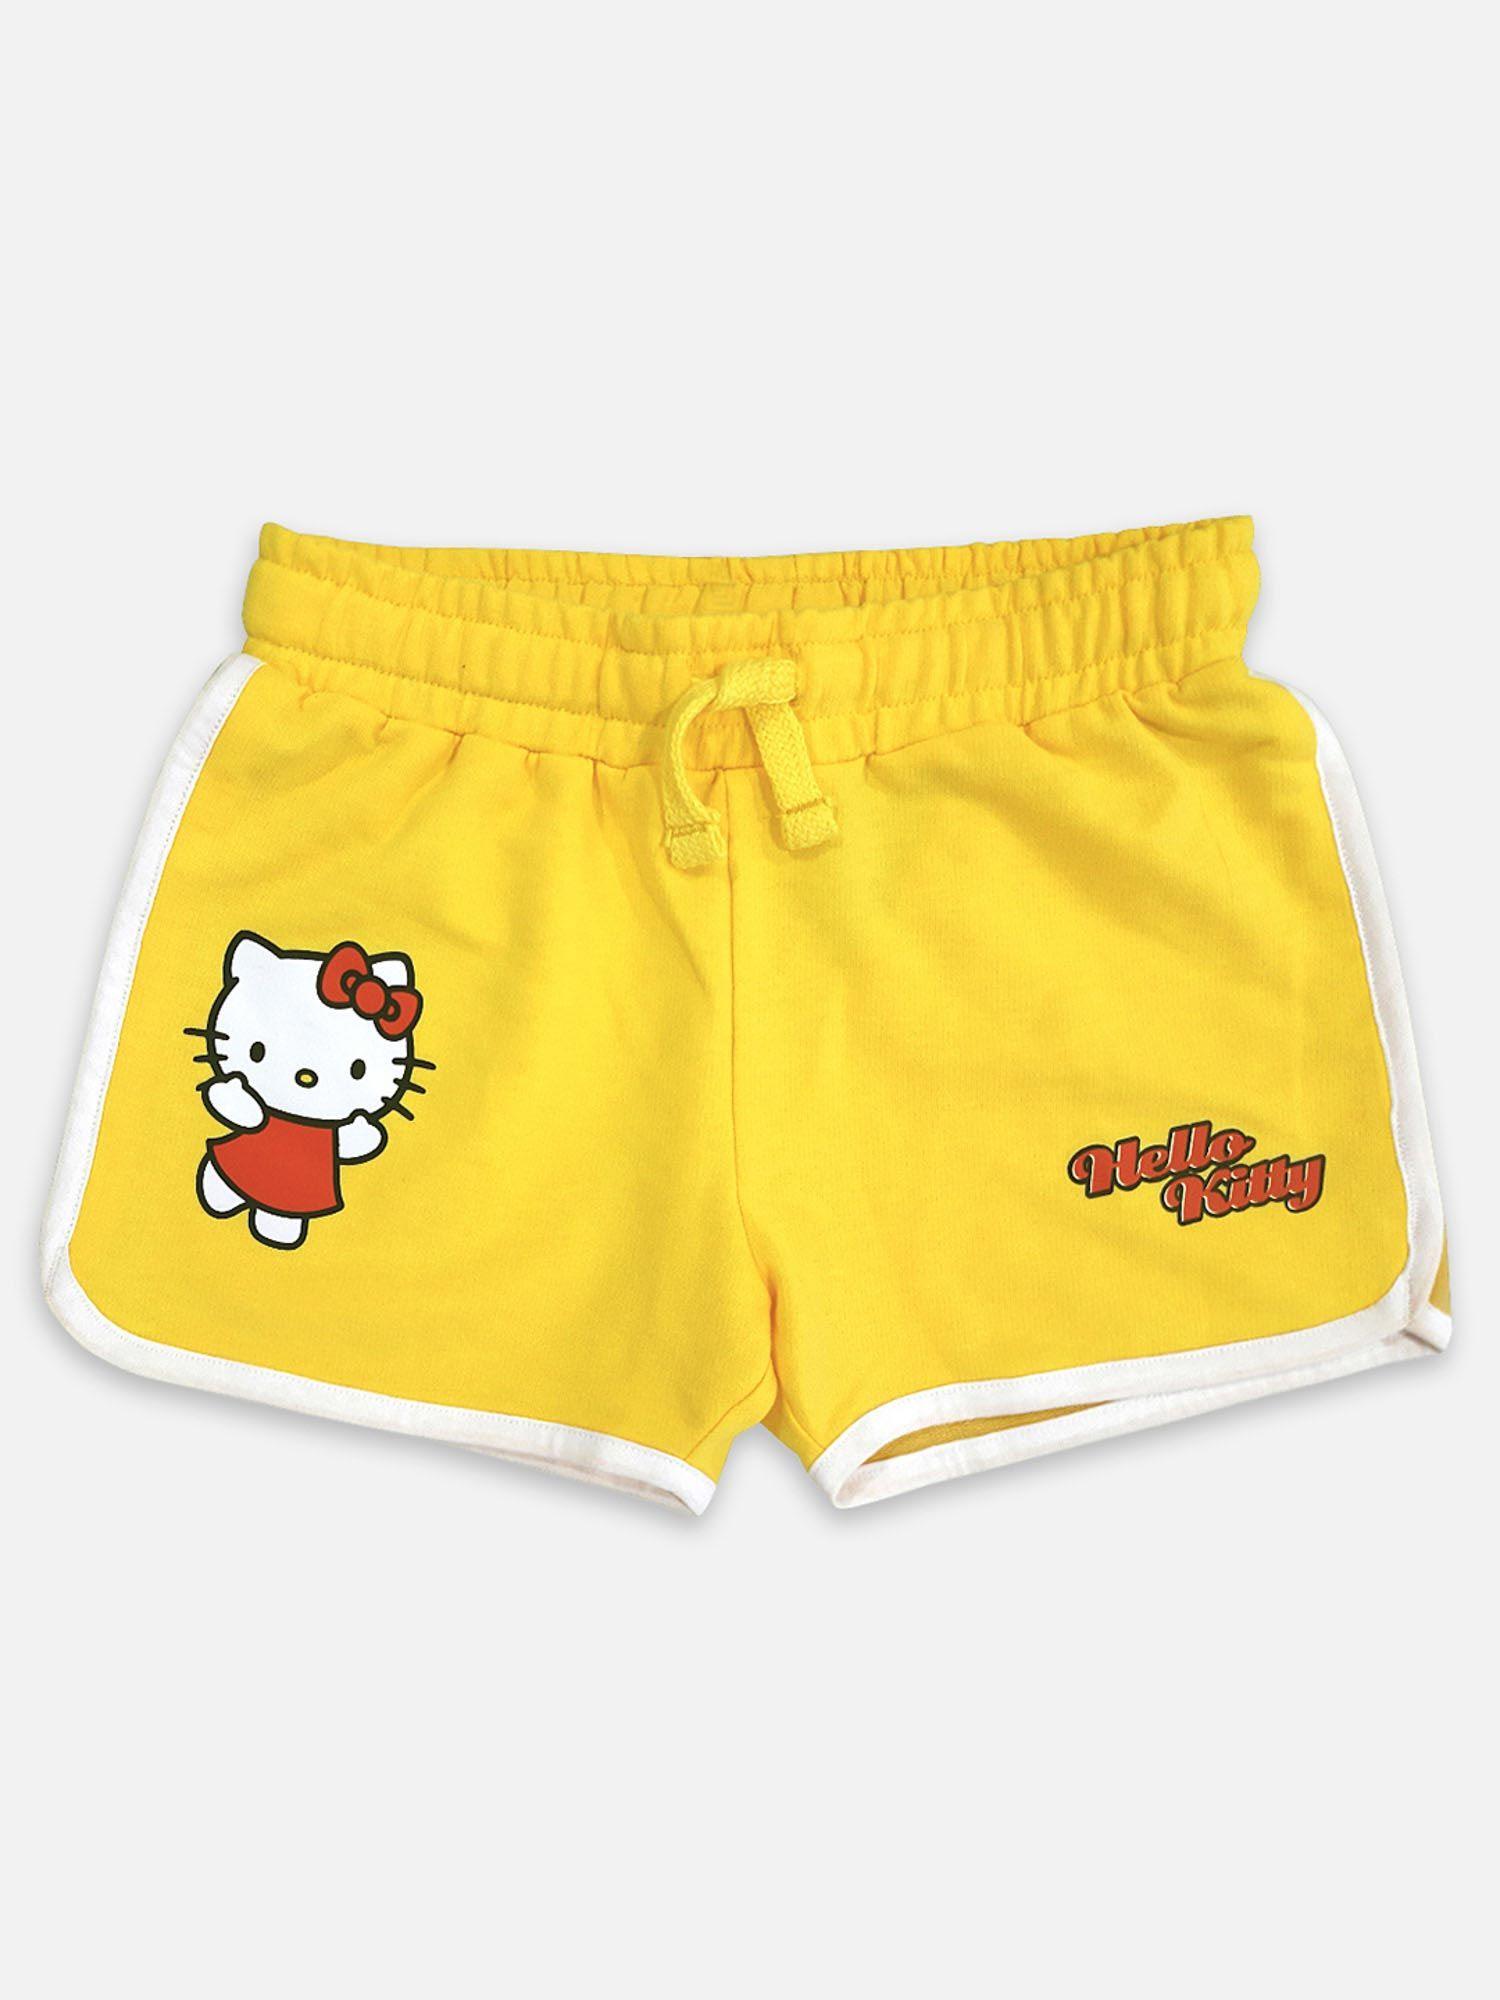 hello-kitty-bright-yellow-shorts-for-kids-girls